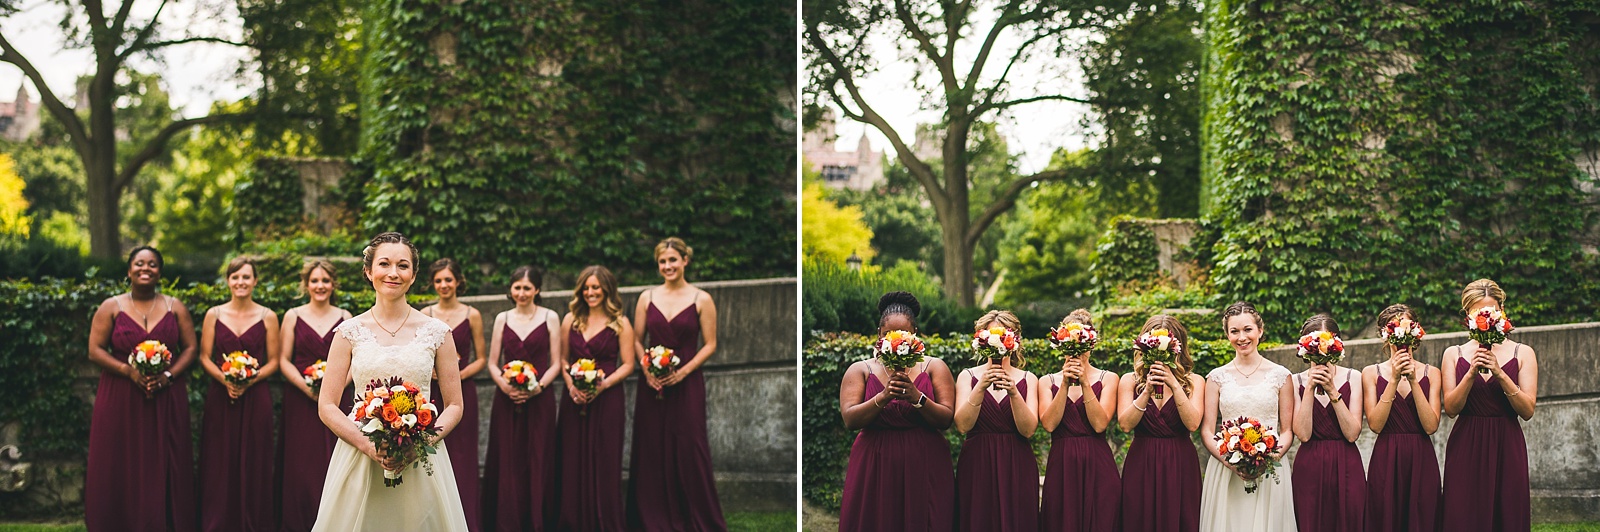 19 bridesmaids at university of chicago - University of Chicago Wedding Photos // Annemarie + Zach